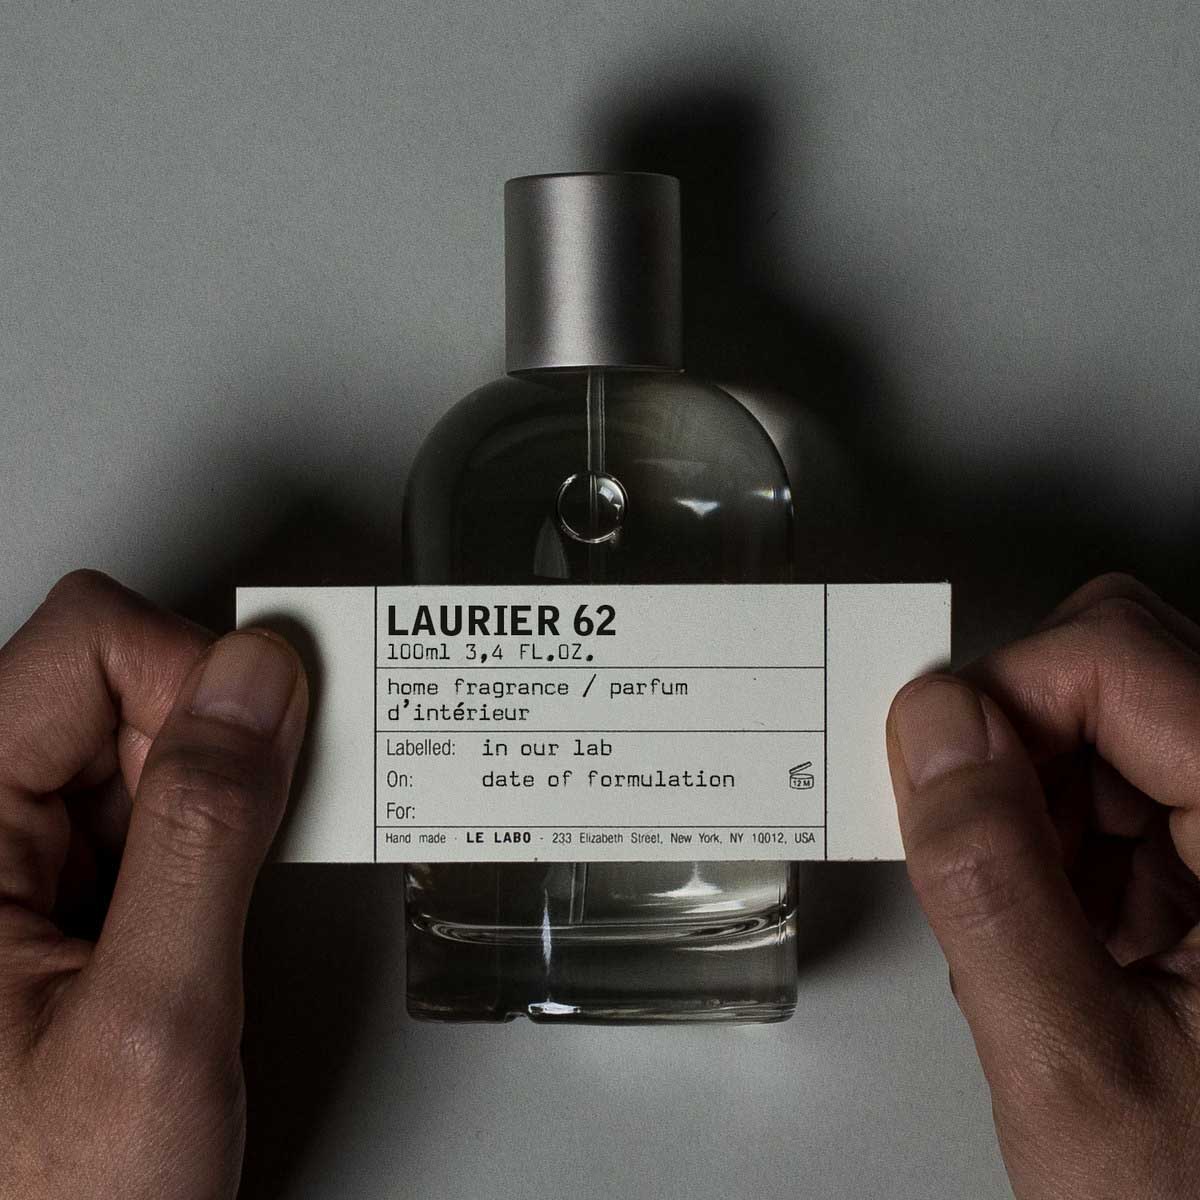 LAURIER 62